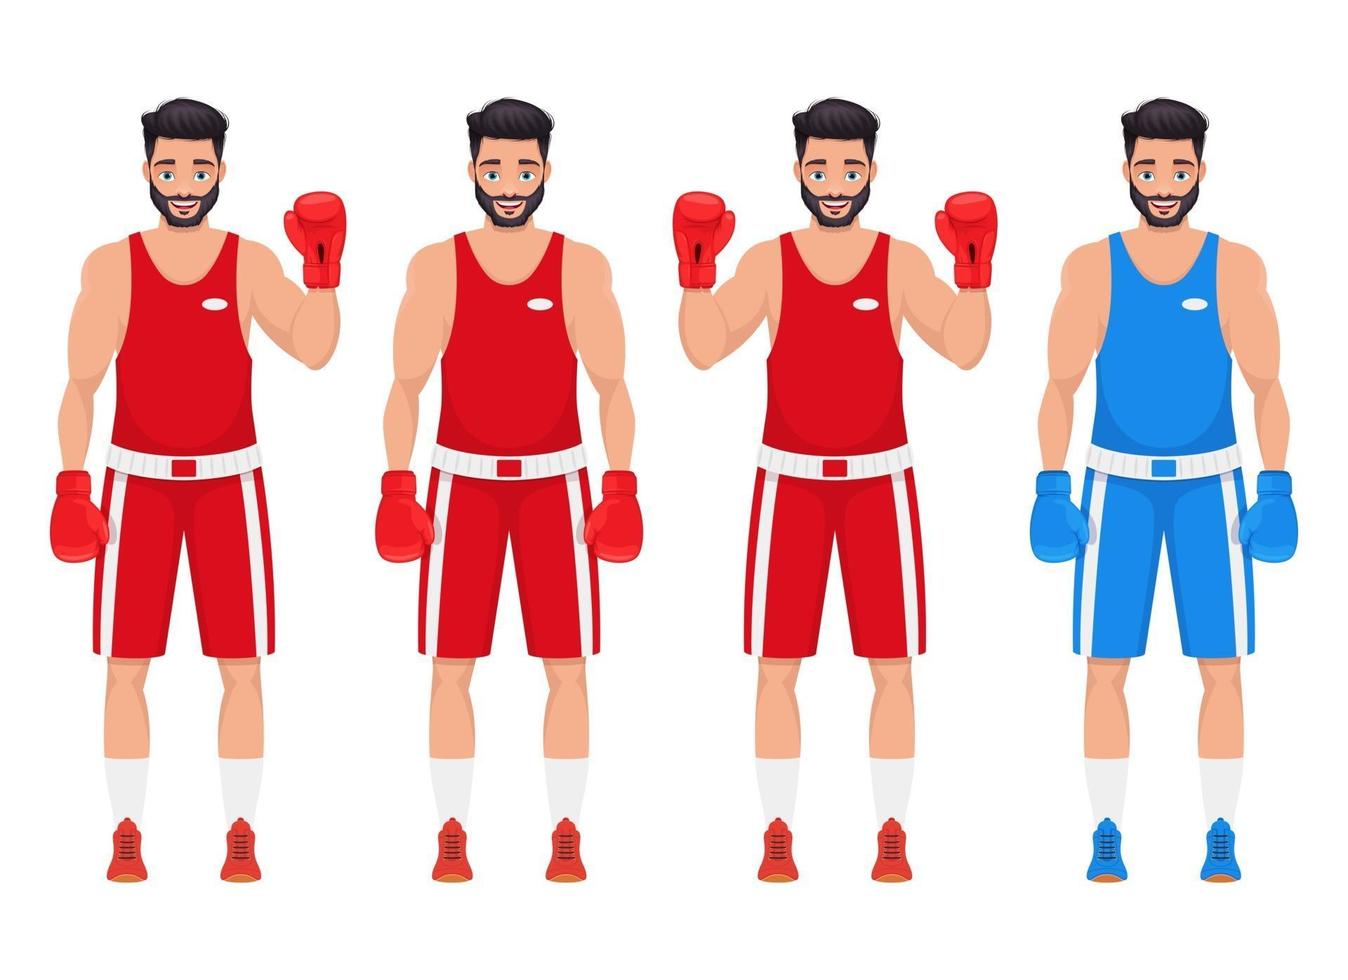 Boxing man vector design illustration isolated on white background